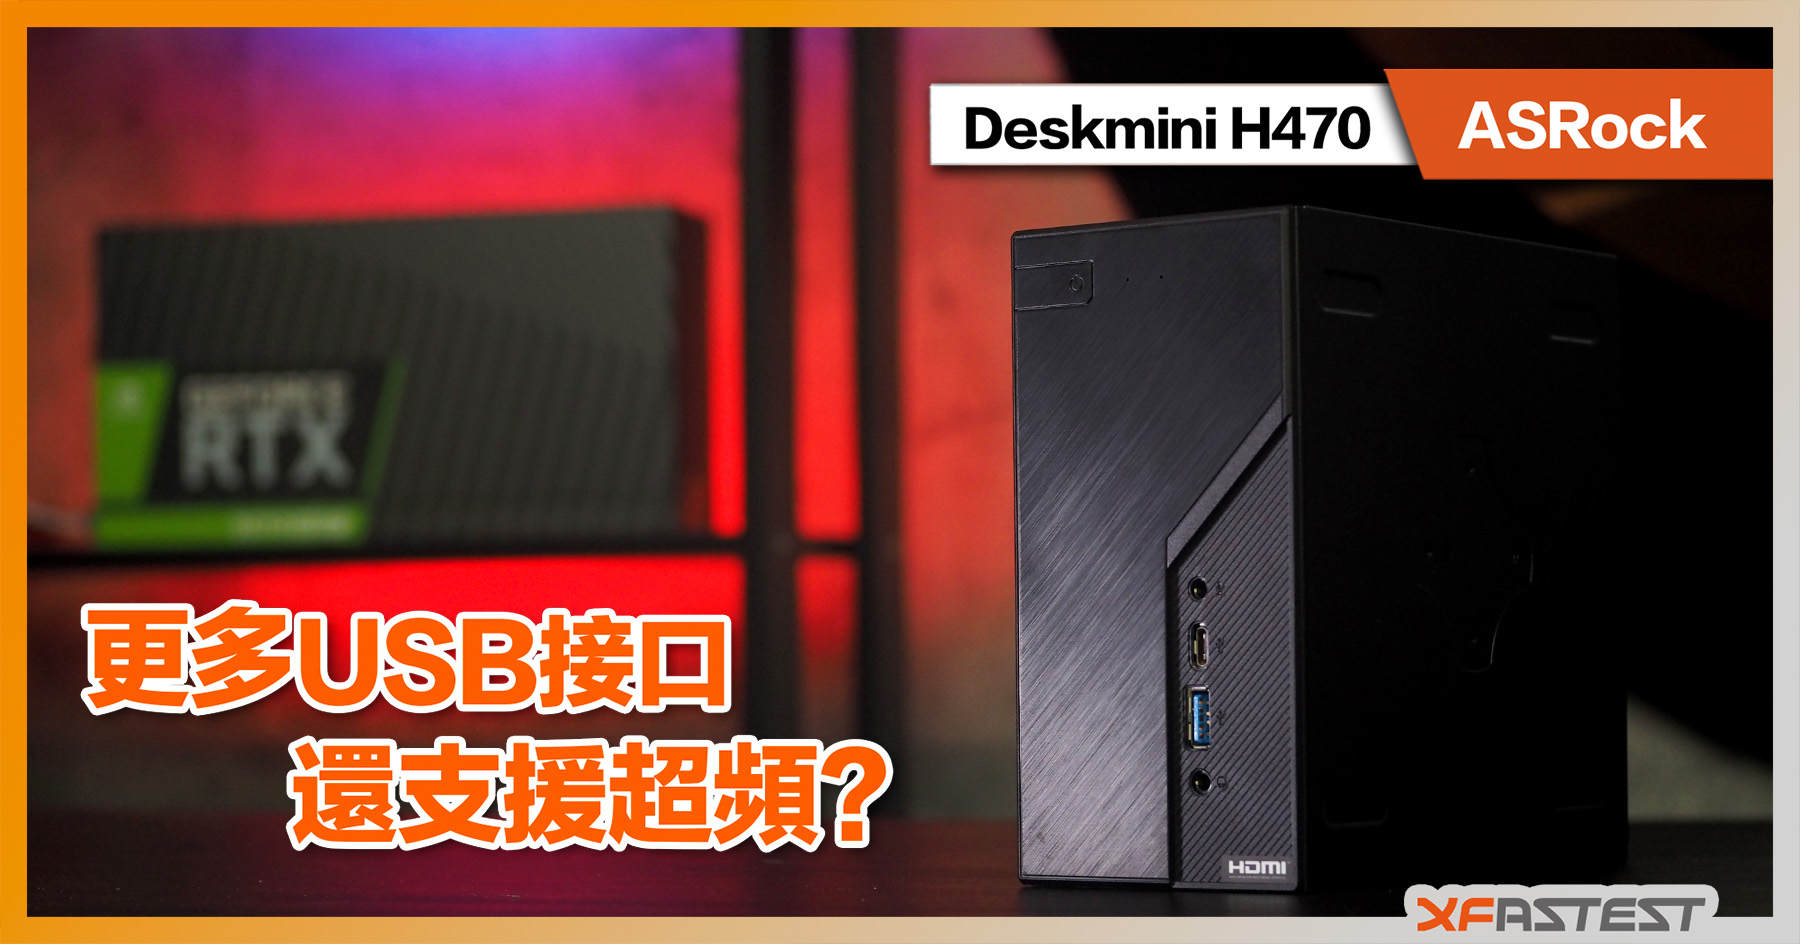 XF開箱] ASRock Deskmini H470 -更多USB接口還支援超頻? - XFastest 